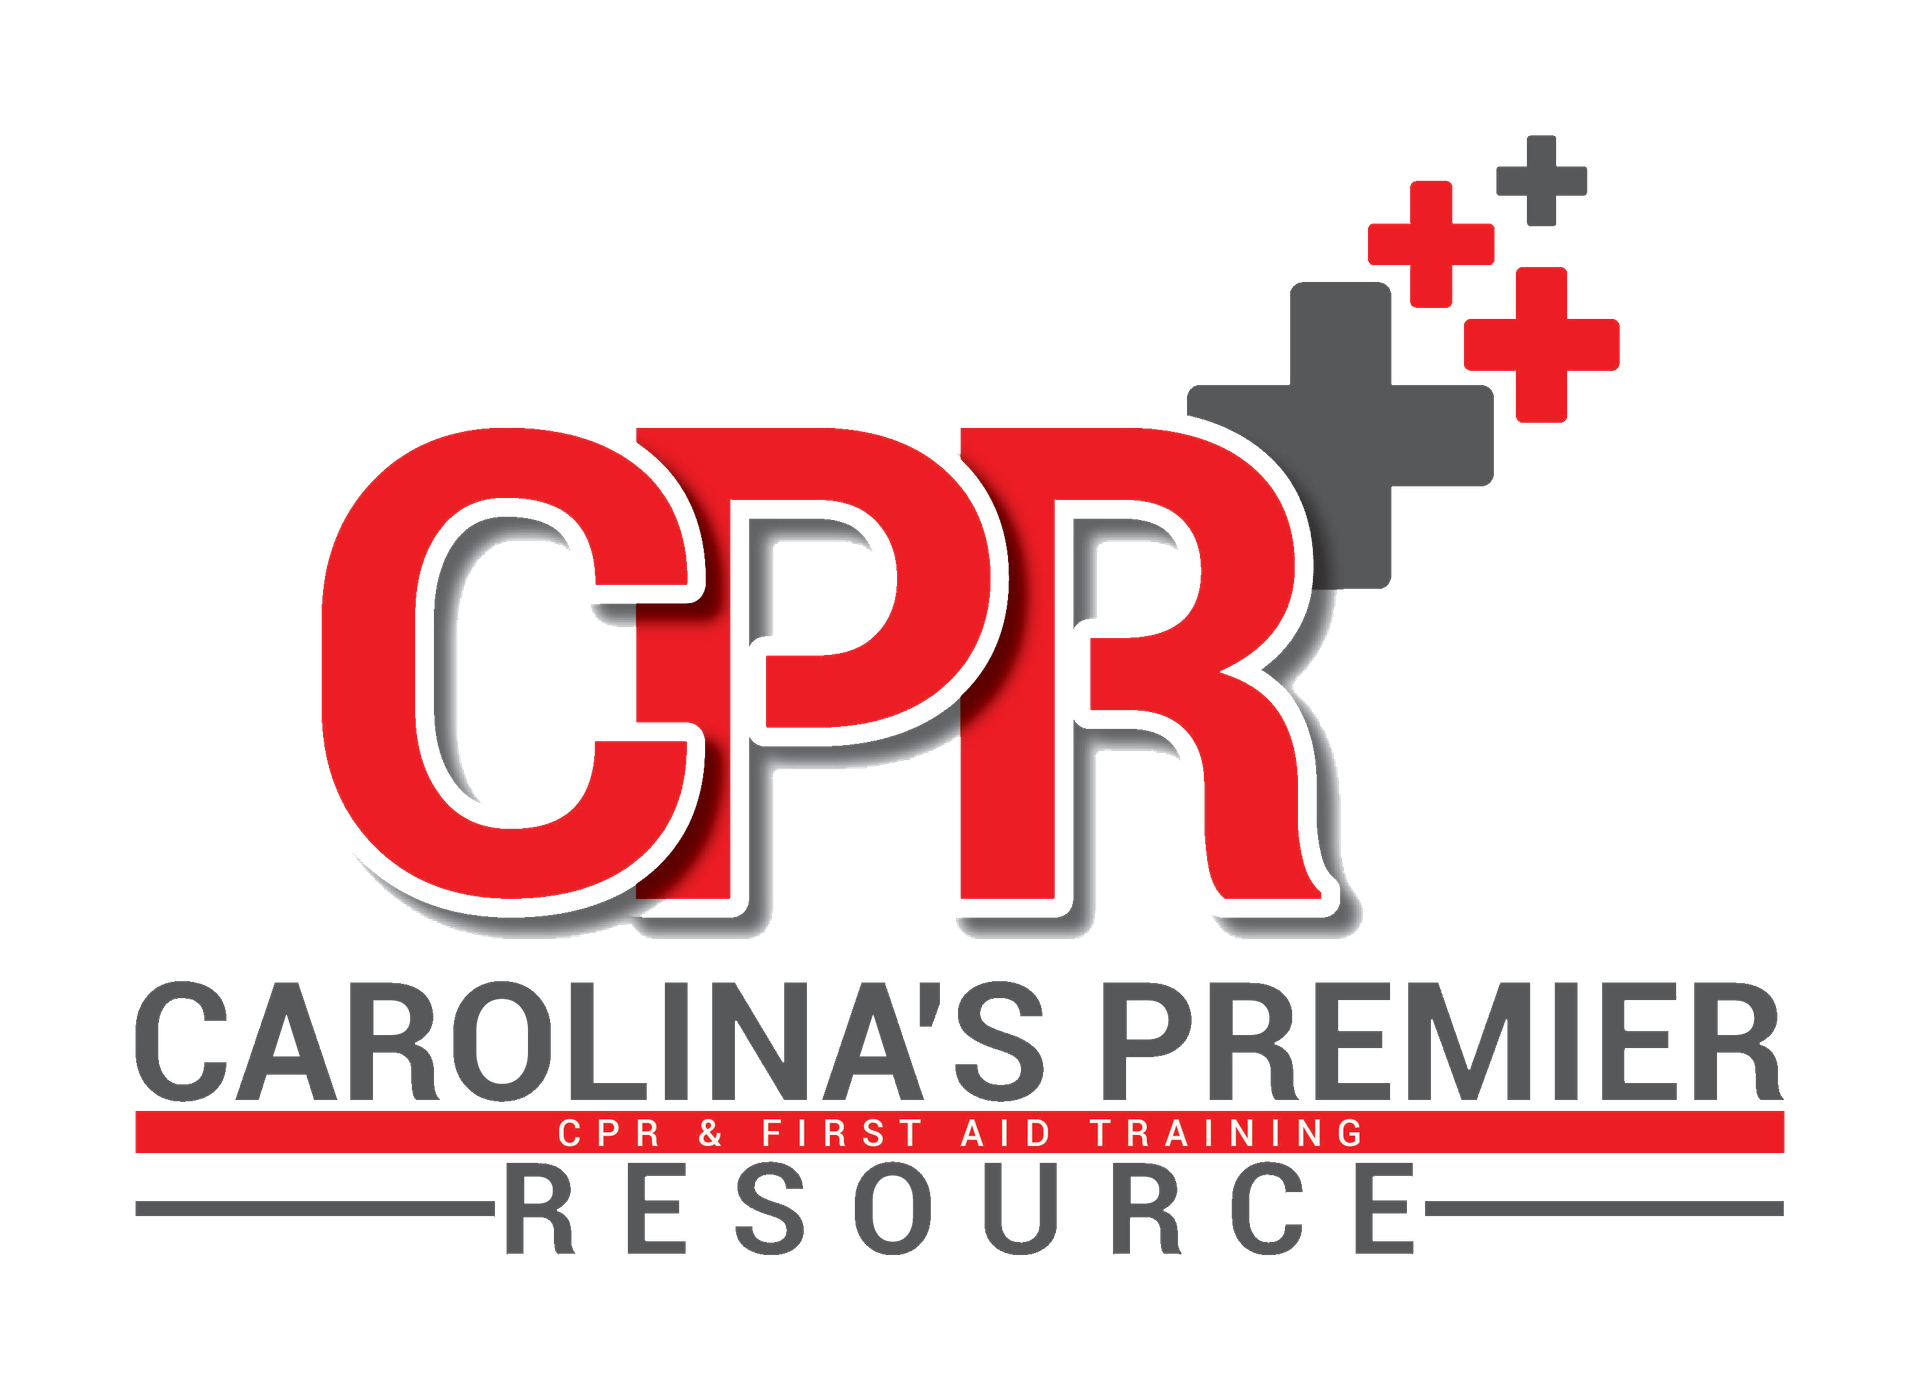 Carolinas Premier Resource 